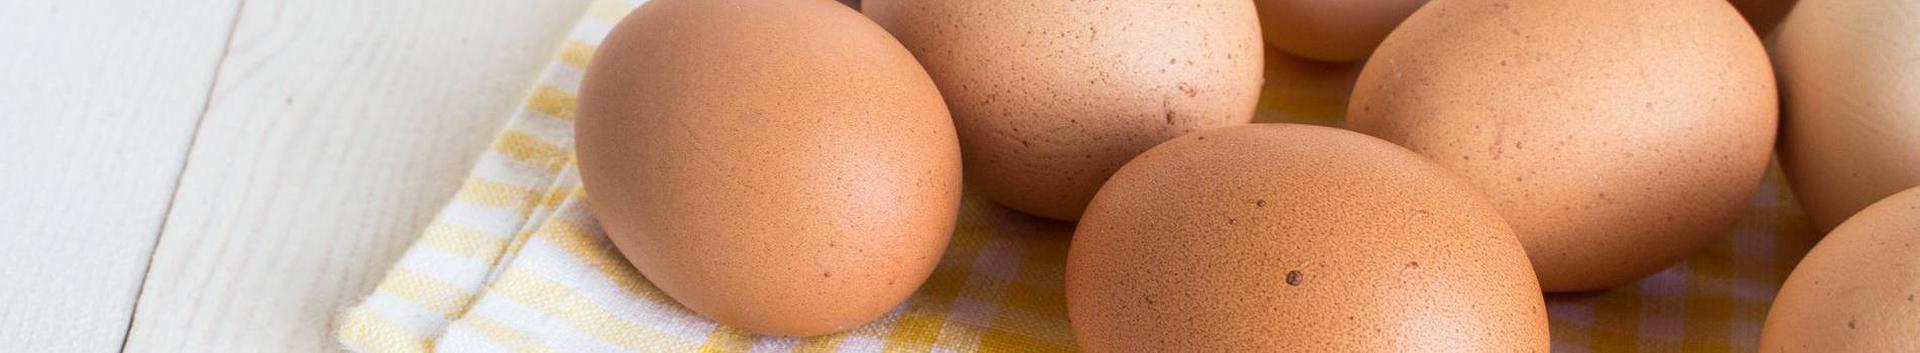 chicken eggs, local production, animal-friendly farming, free range chickens